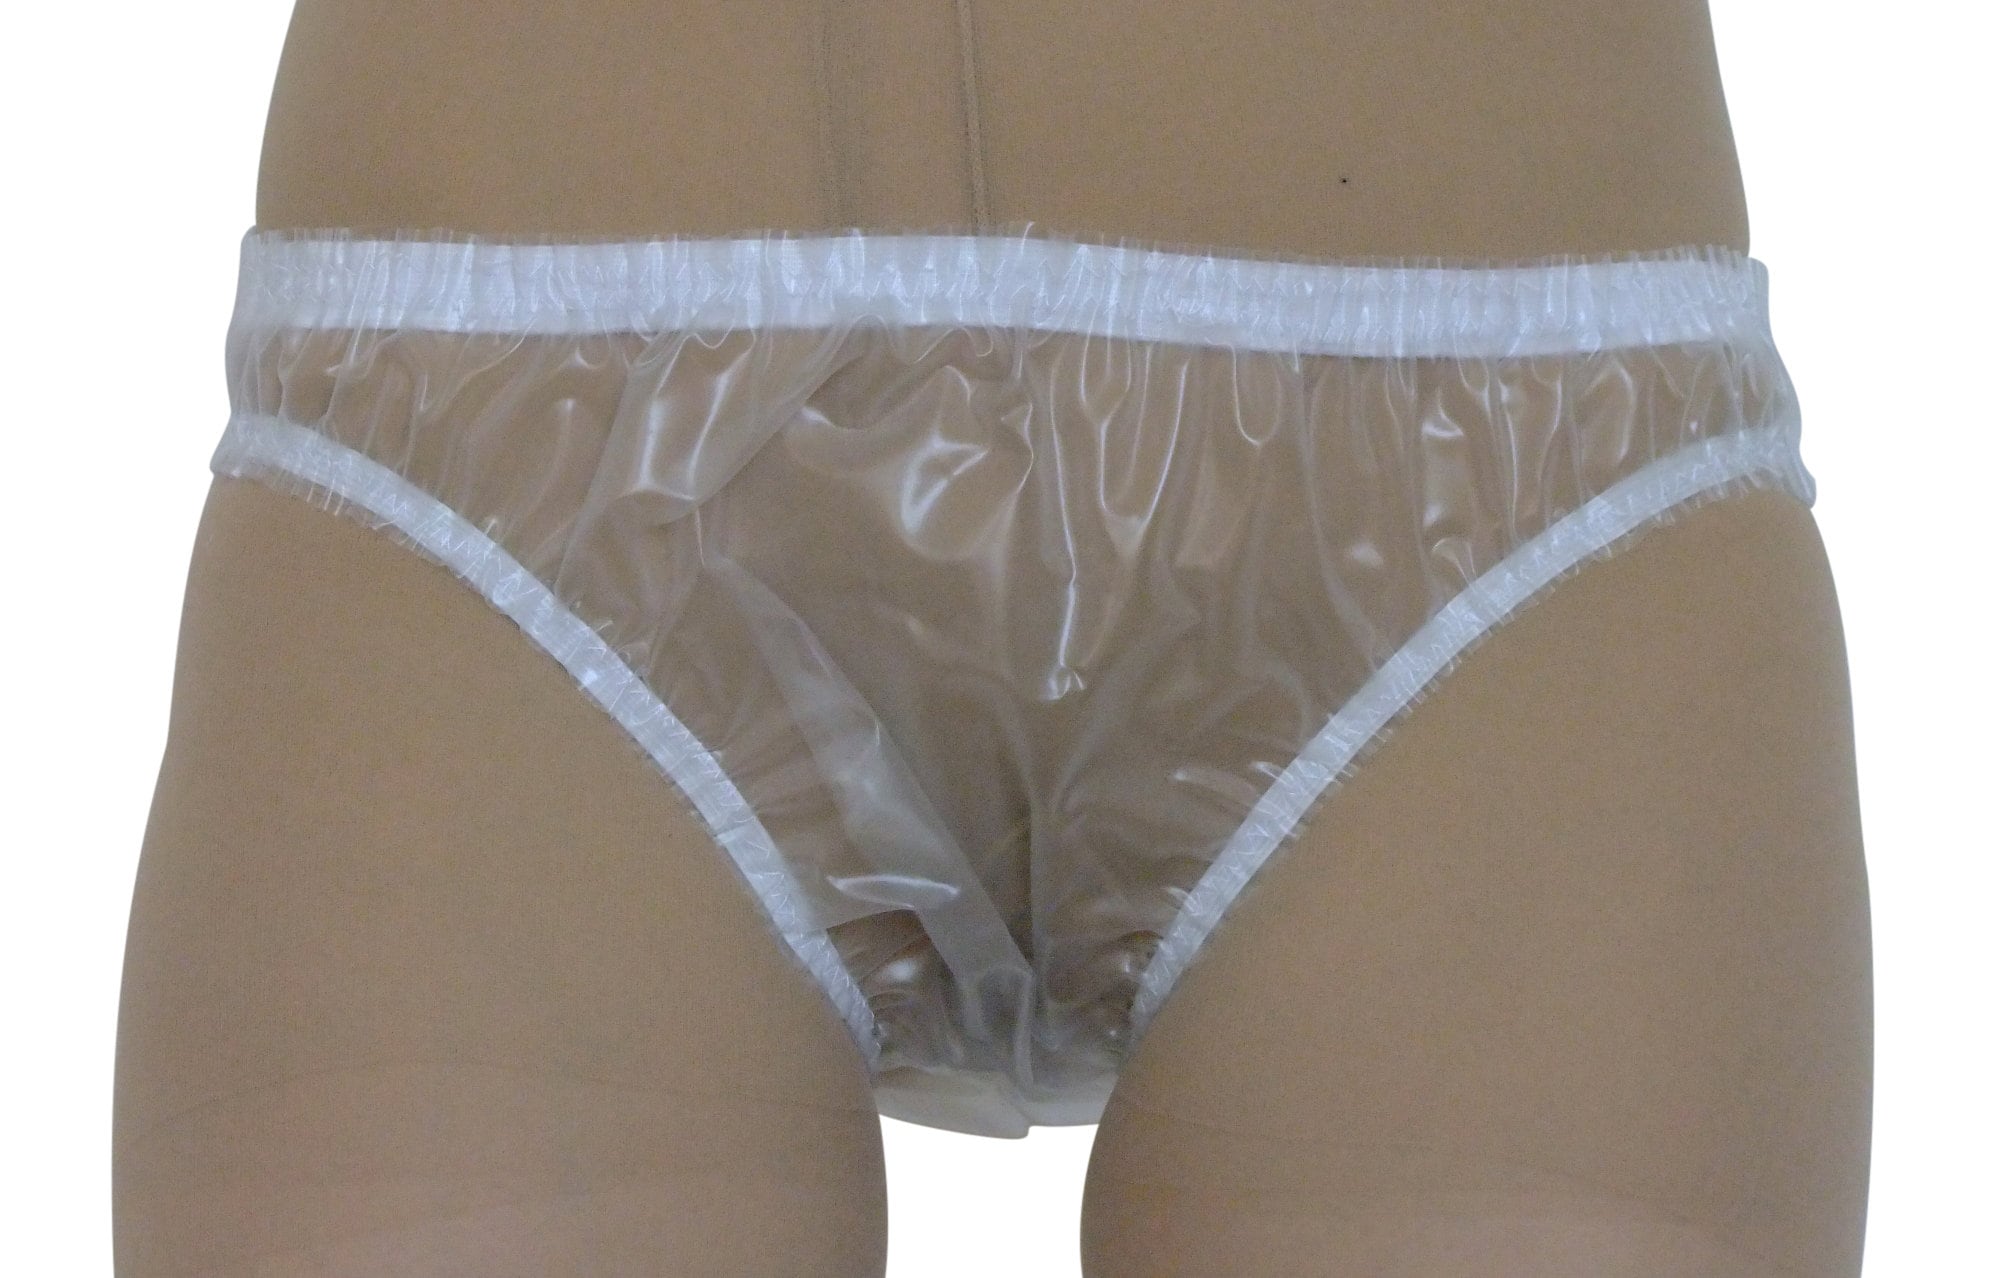 Semi Clear PVC Briefs (Knickers, Pants, Panties) See Through Plastic  Underwear. Size M/L.